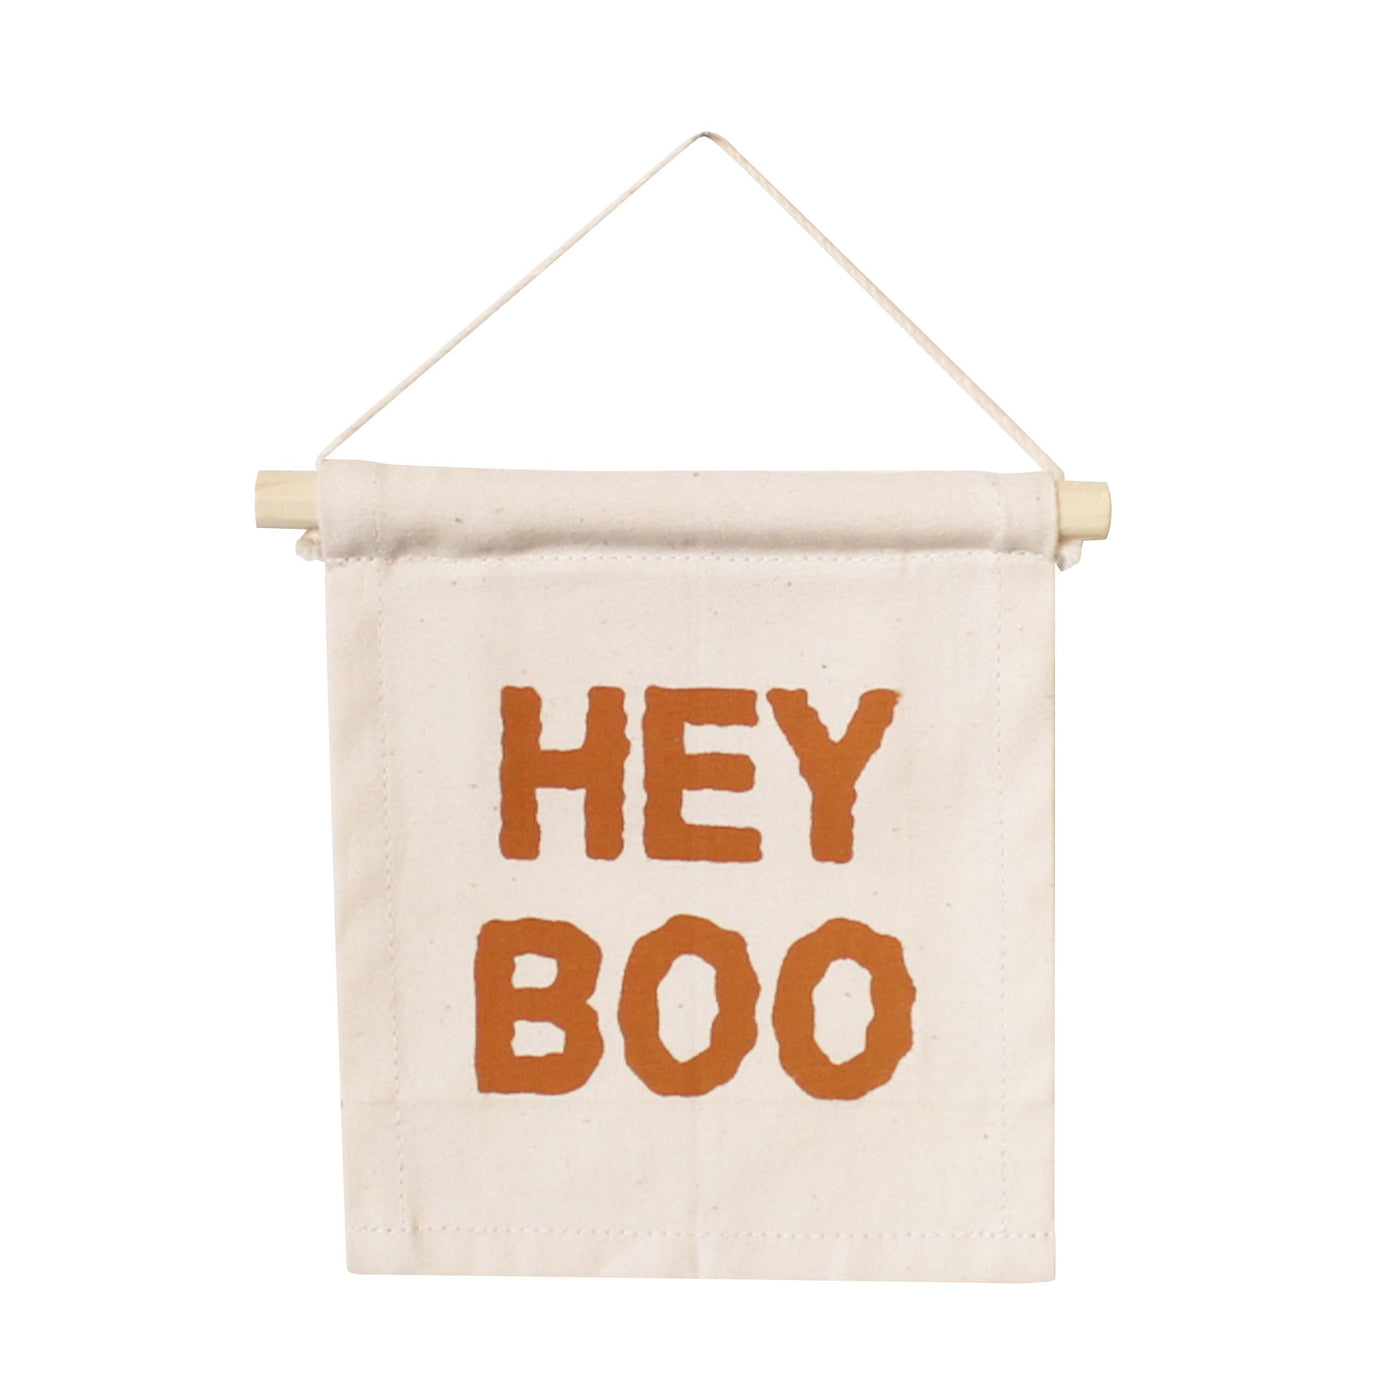 hey boo hang sign